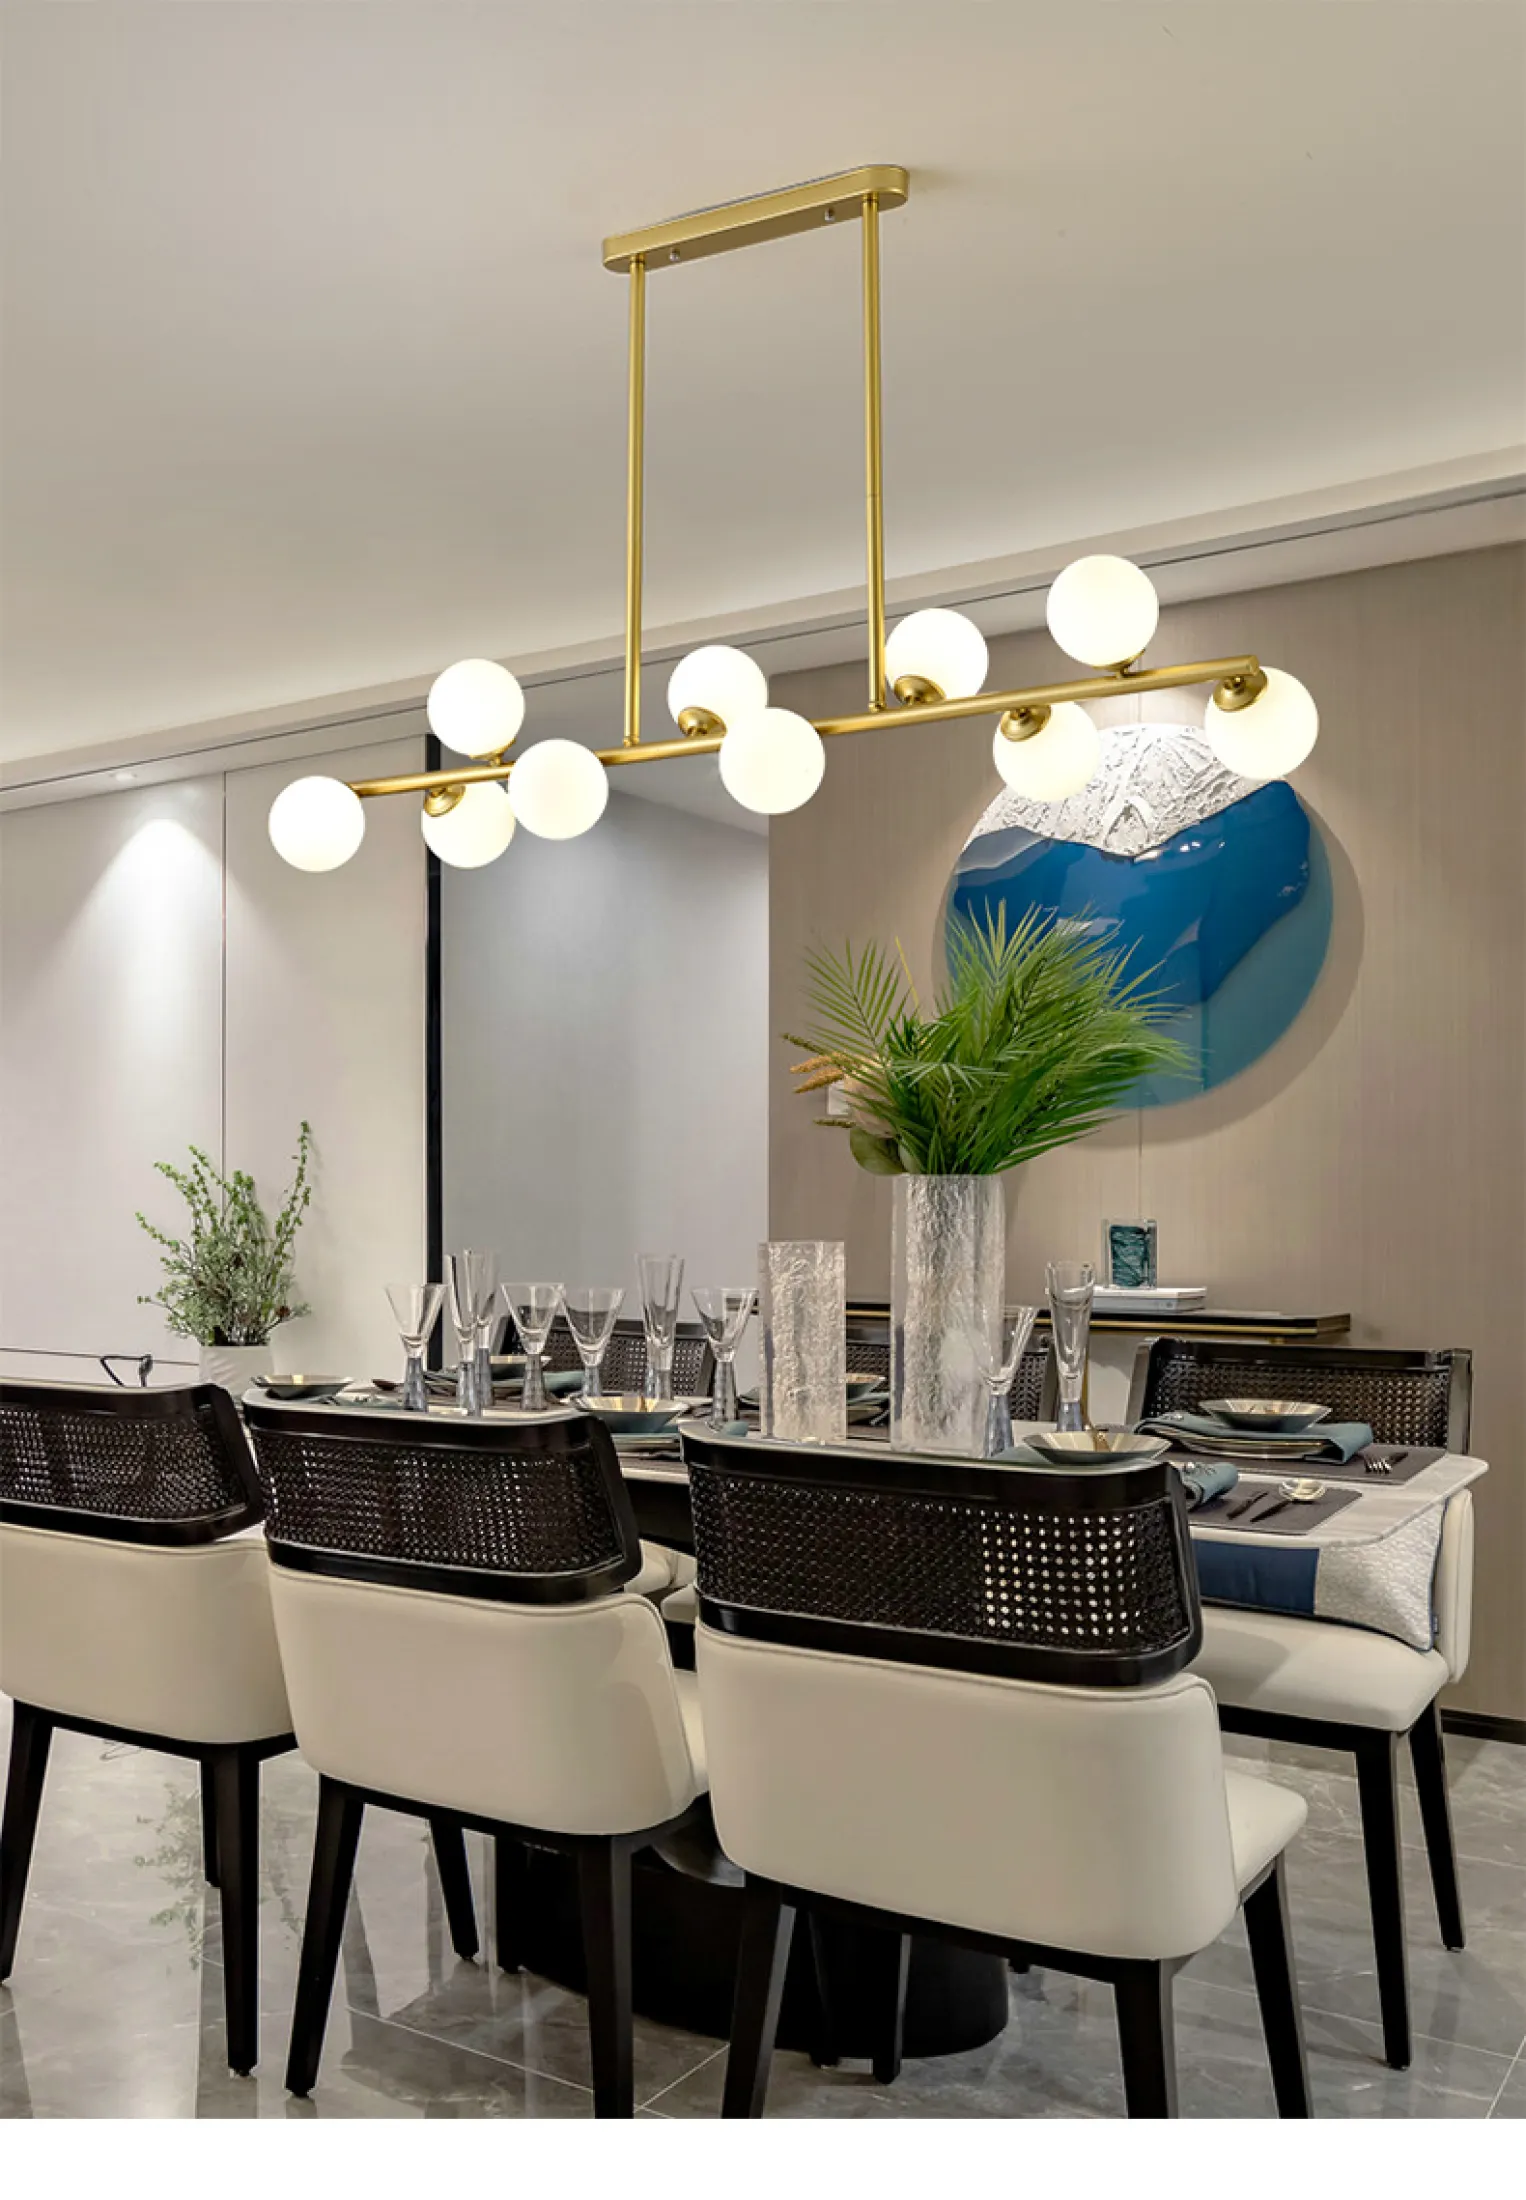 Lampu Meja Makan Hangat, Nordic Rumah Restoran Lampu Makan Ruang Makan  Multi Kepala 2020 Baru Setrip Panjang Kaca Emas Tempat Lilin Kacang Ajaib |  Lazada Indonesia